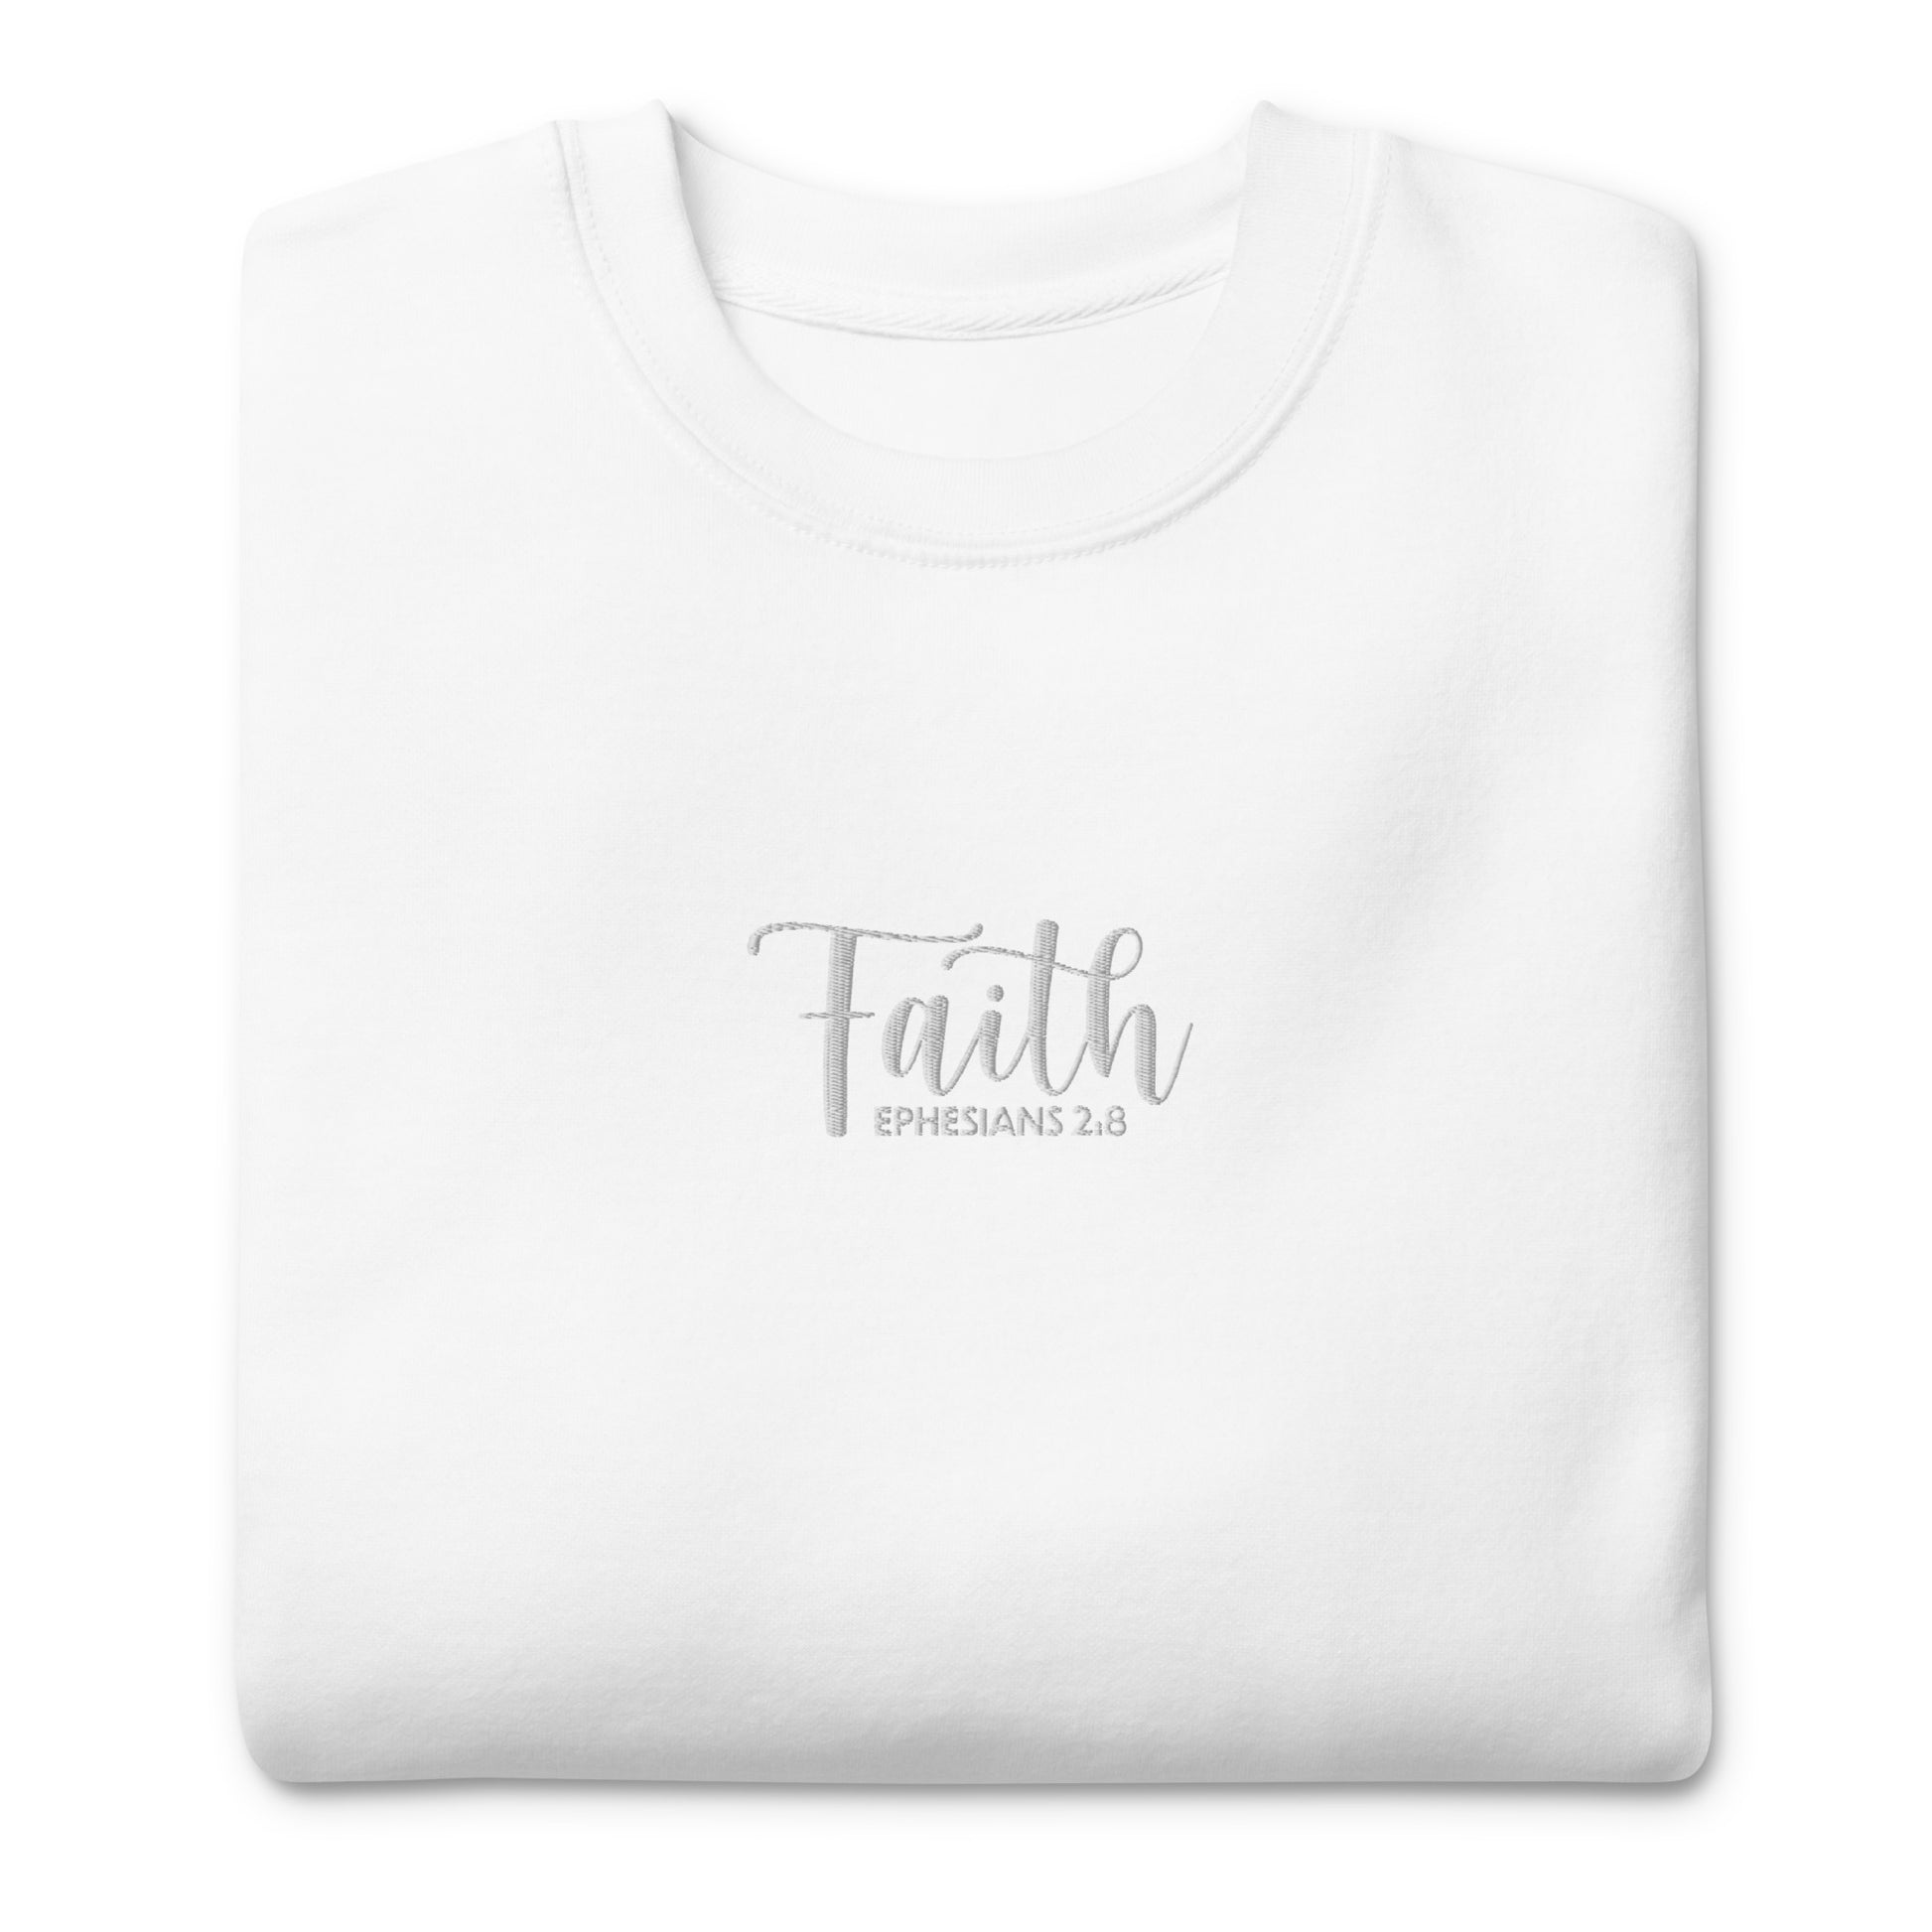 Women's Faith Premium Embroidered Sweatshirt - Humble & Faithful Co.